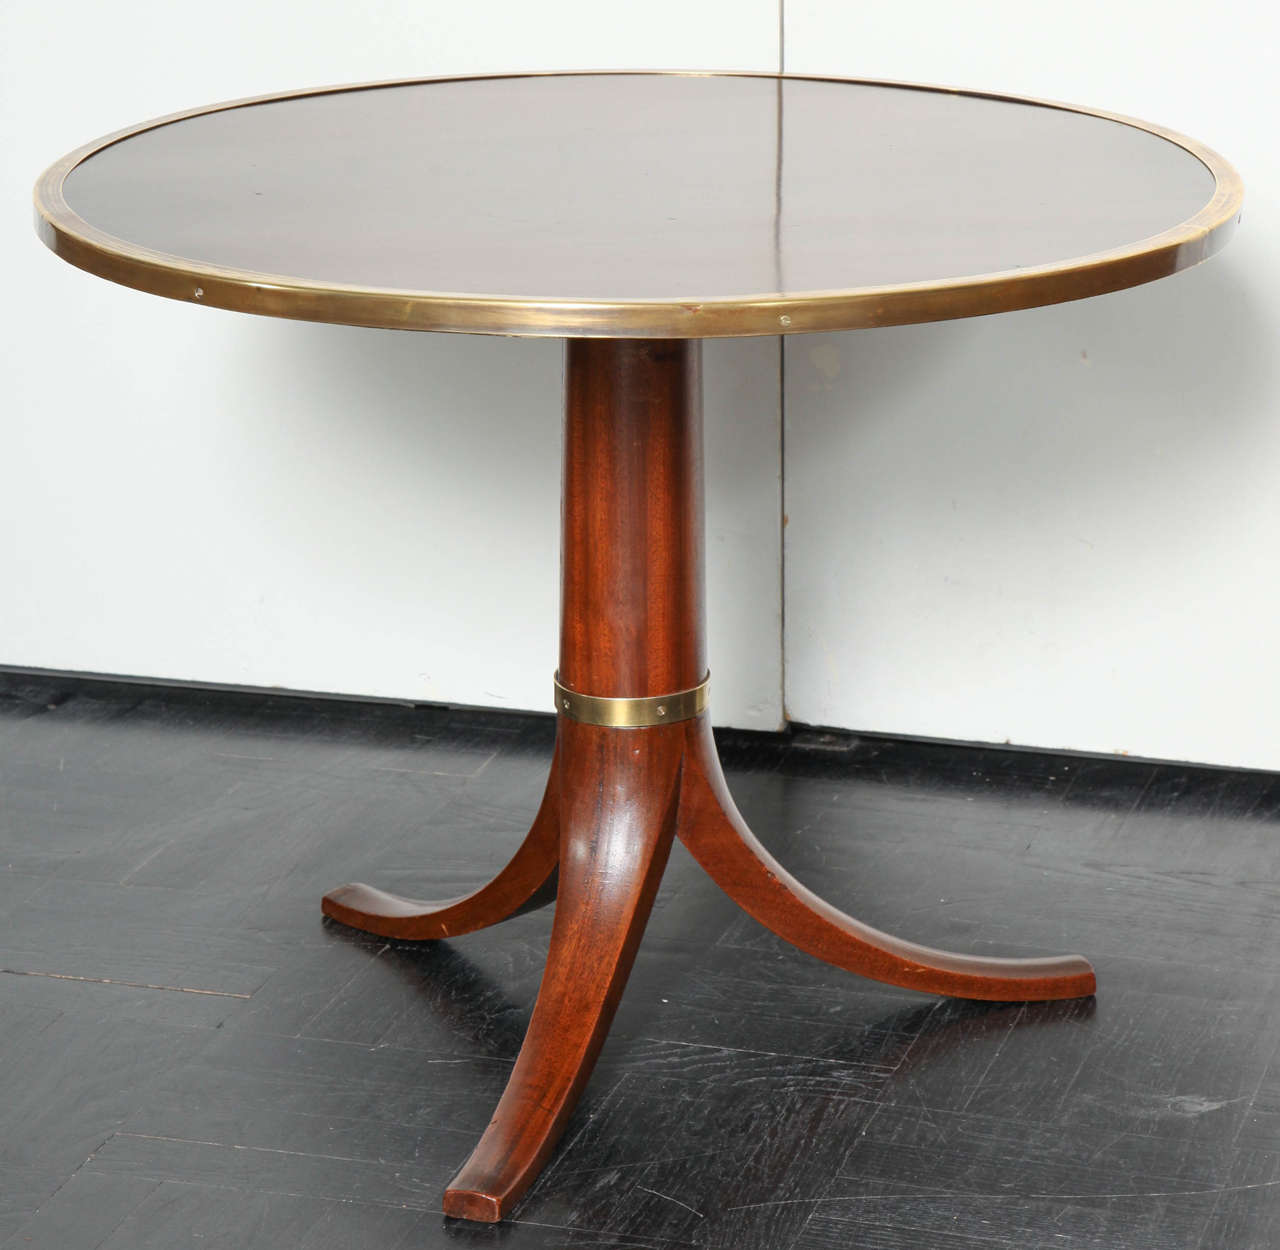 Mid-20th Century mahogany circular table, brass band edge, tripod legs